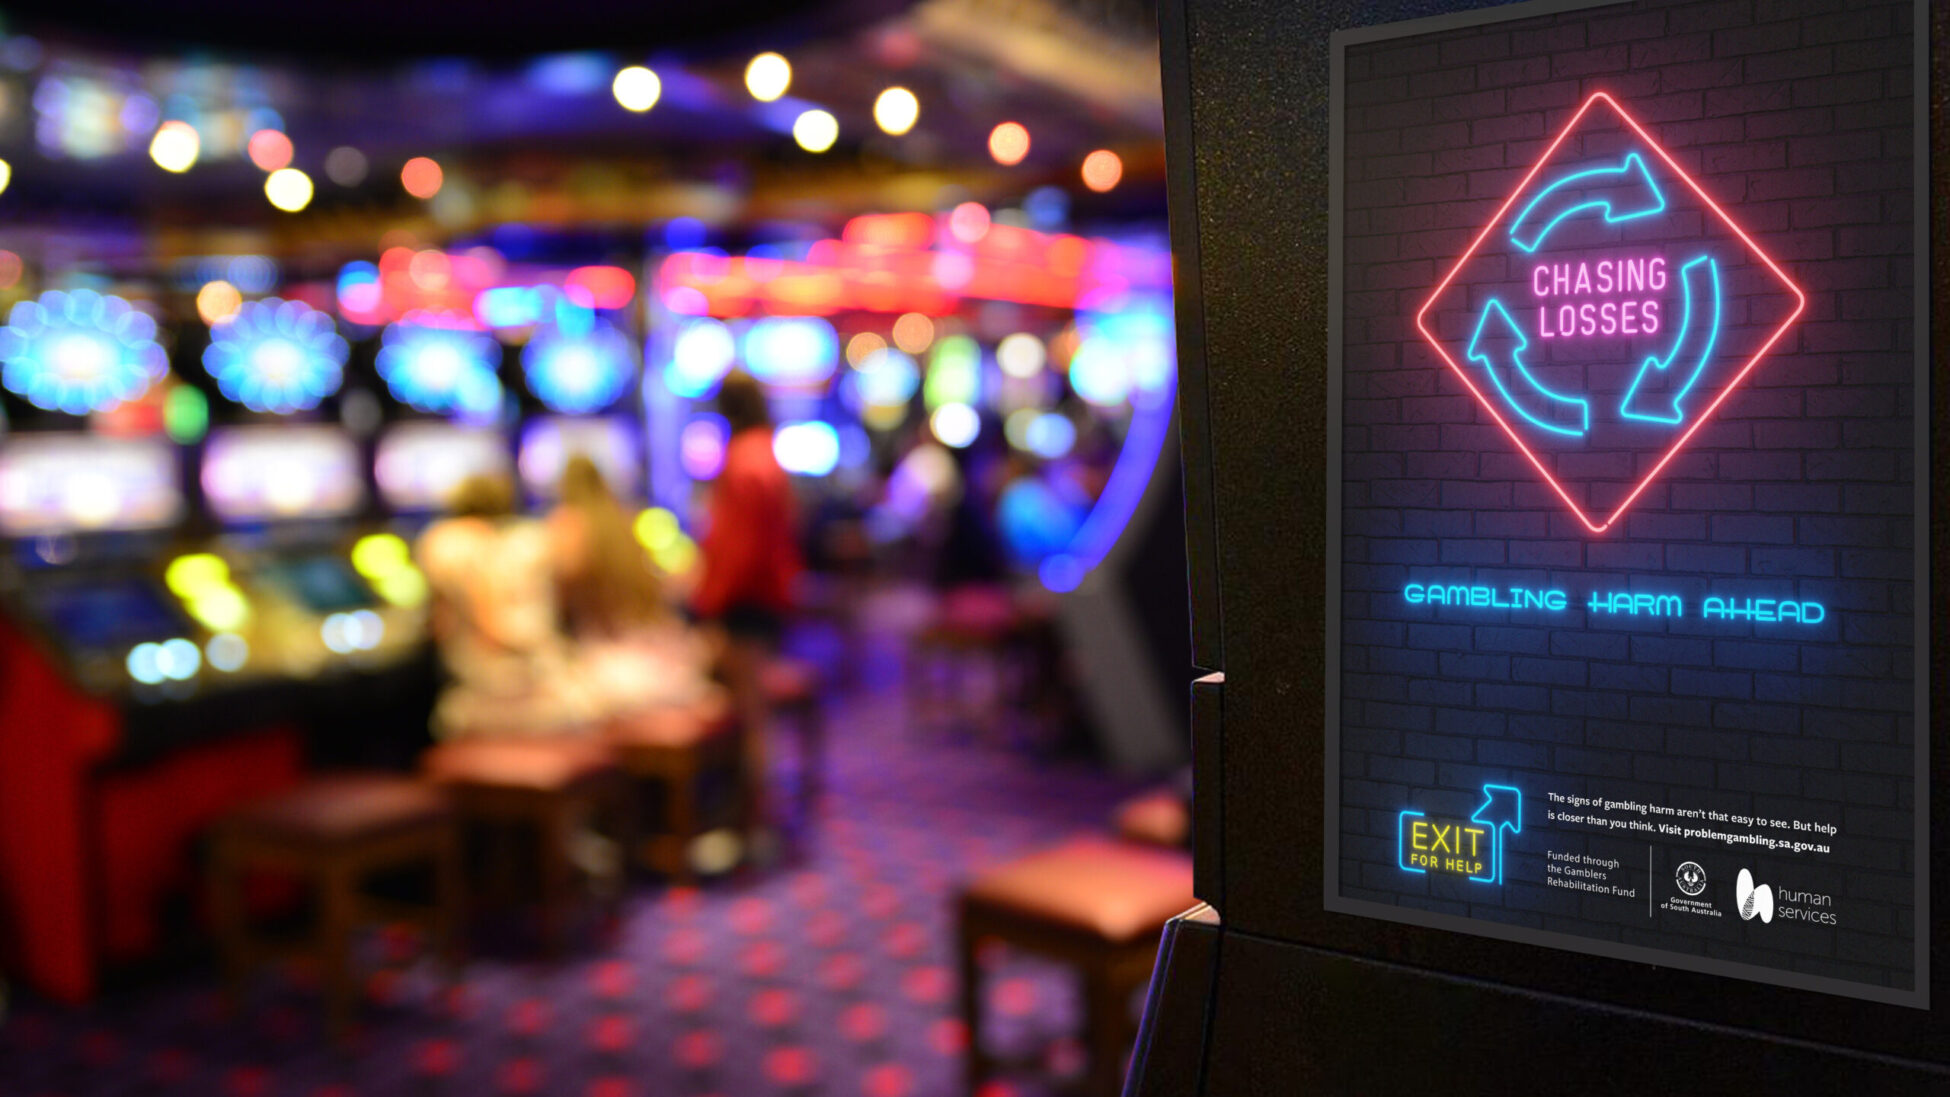 Changing Losses - Gambling Harm Ahead advertising campaign